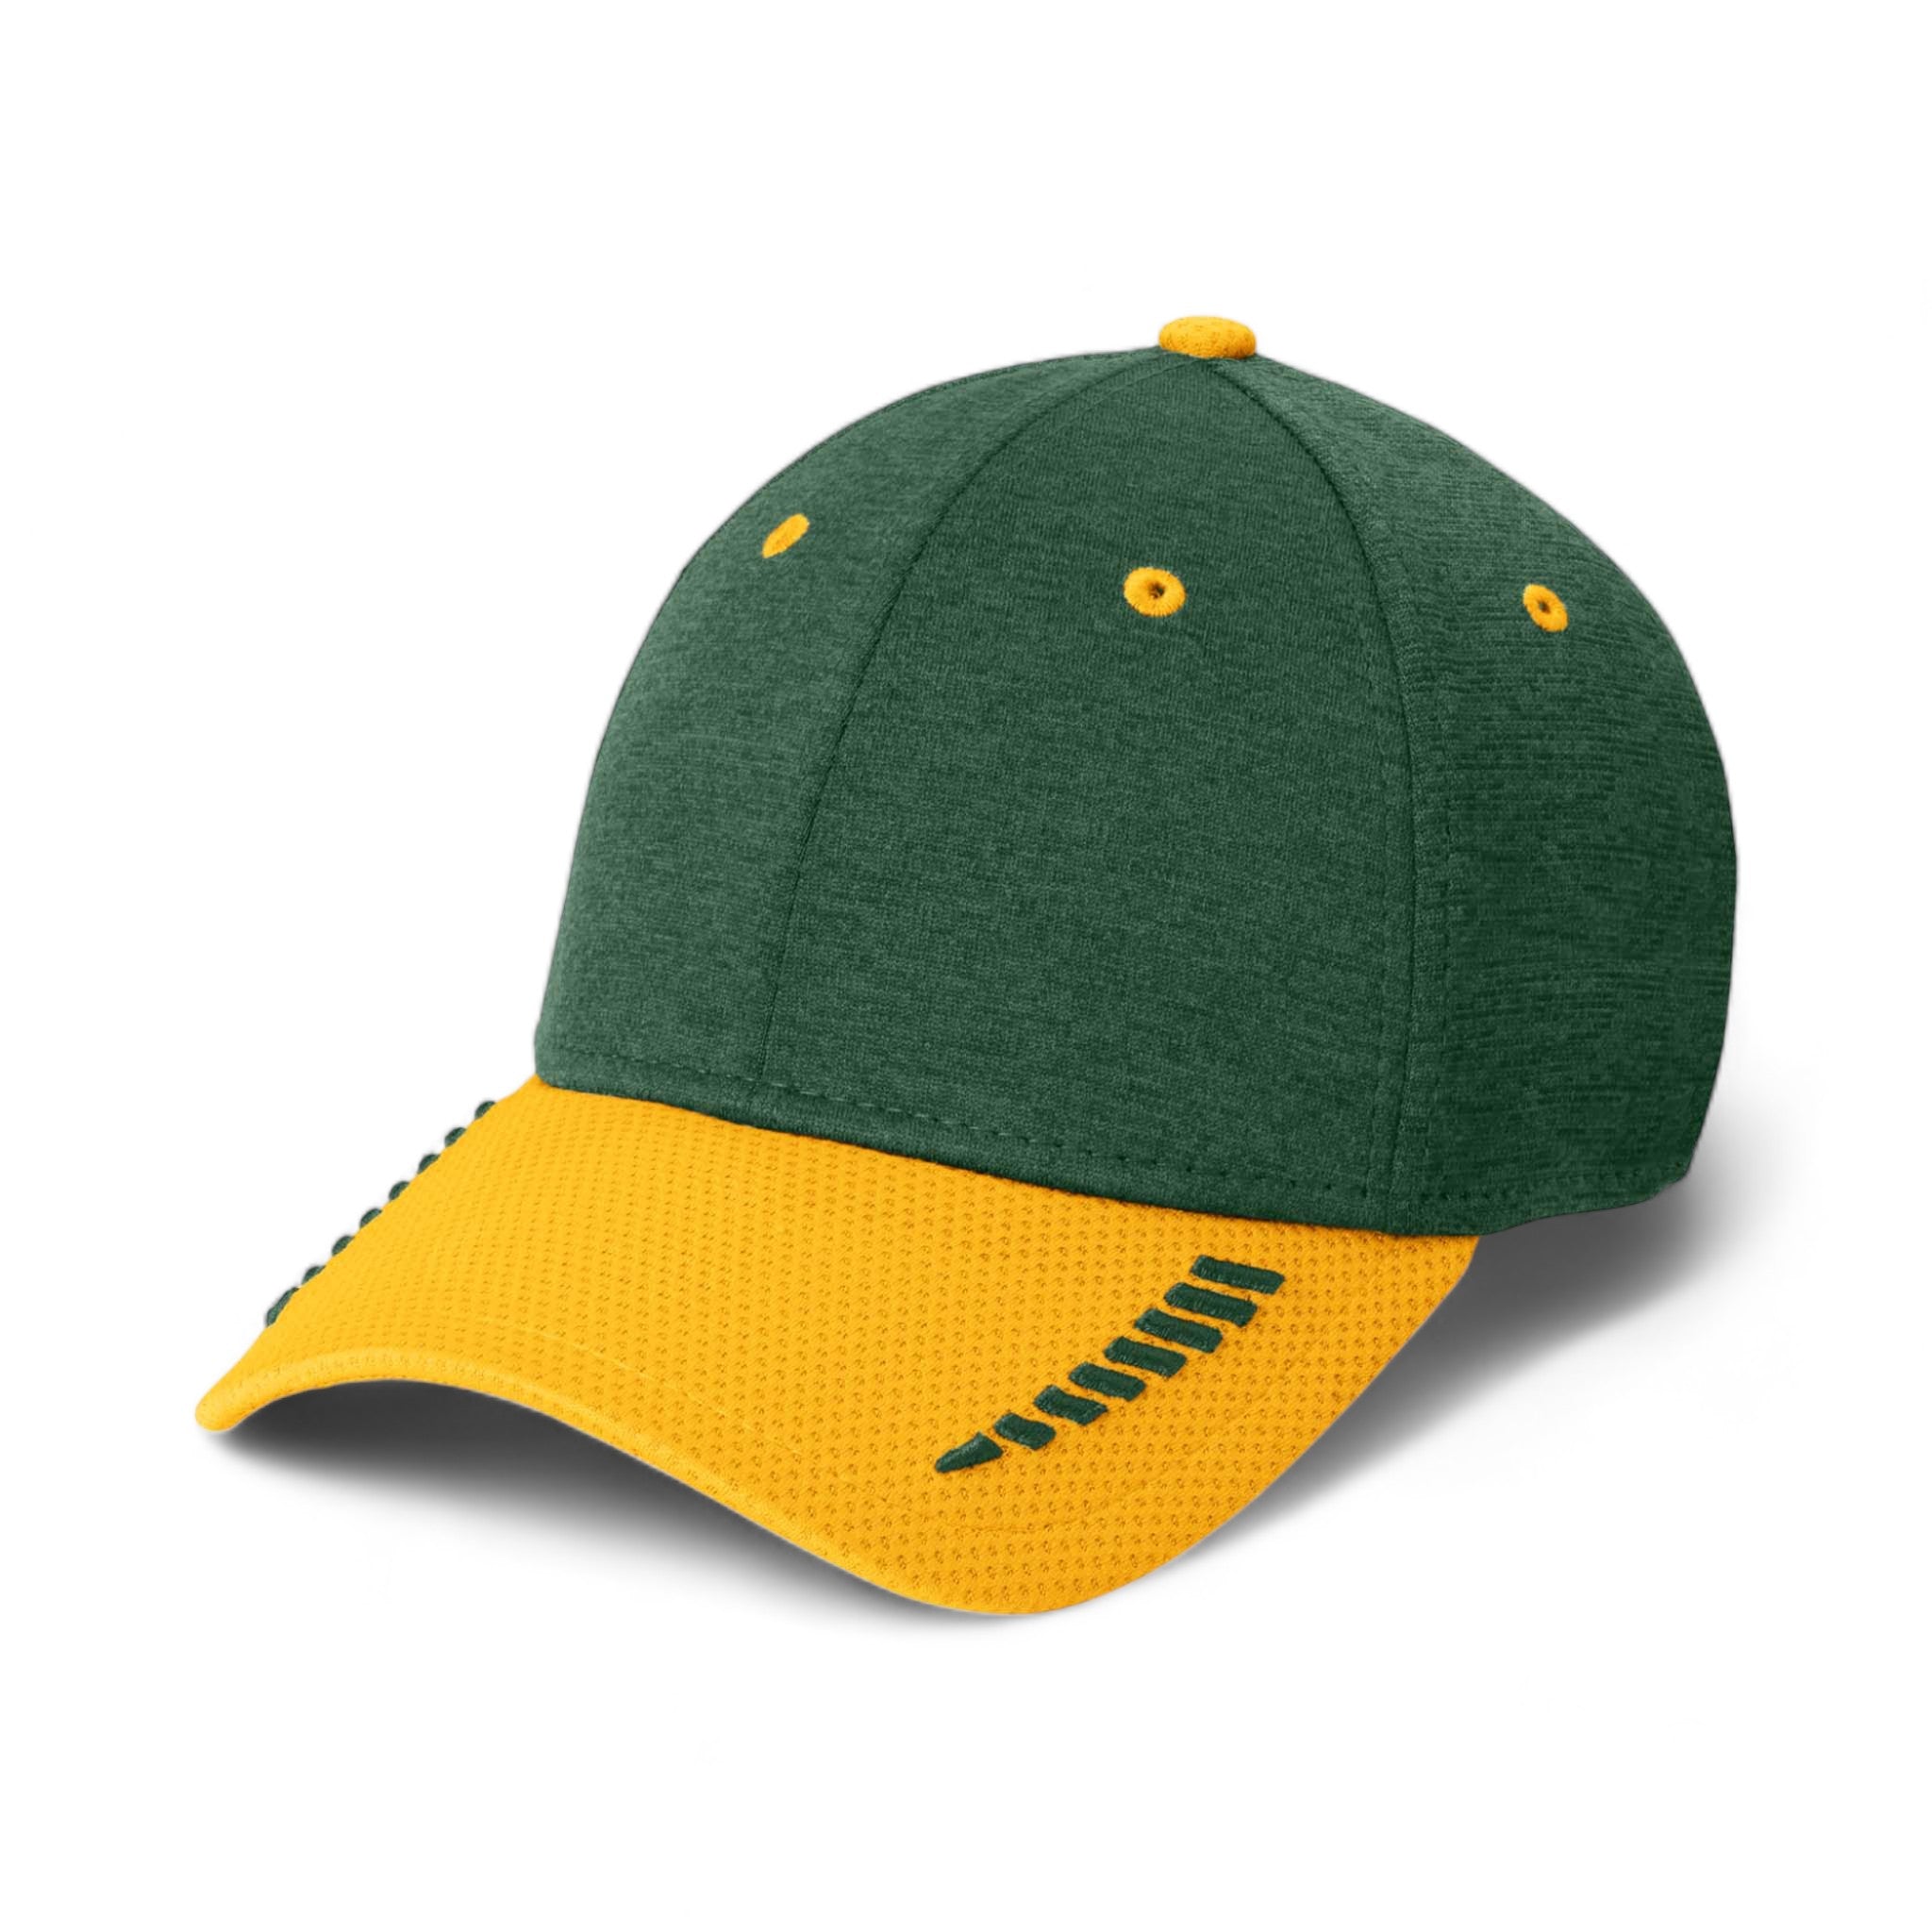 Side view of New Era NE704 custom hat in gold and dark green shadow heather